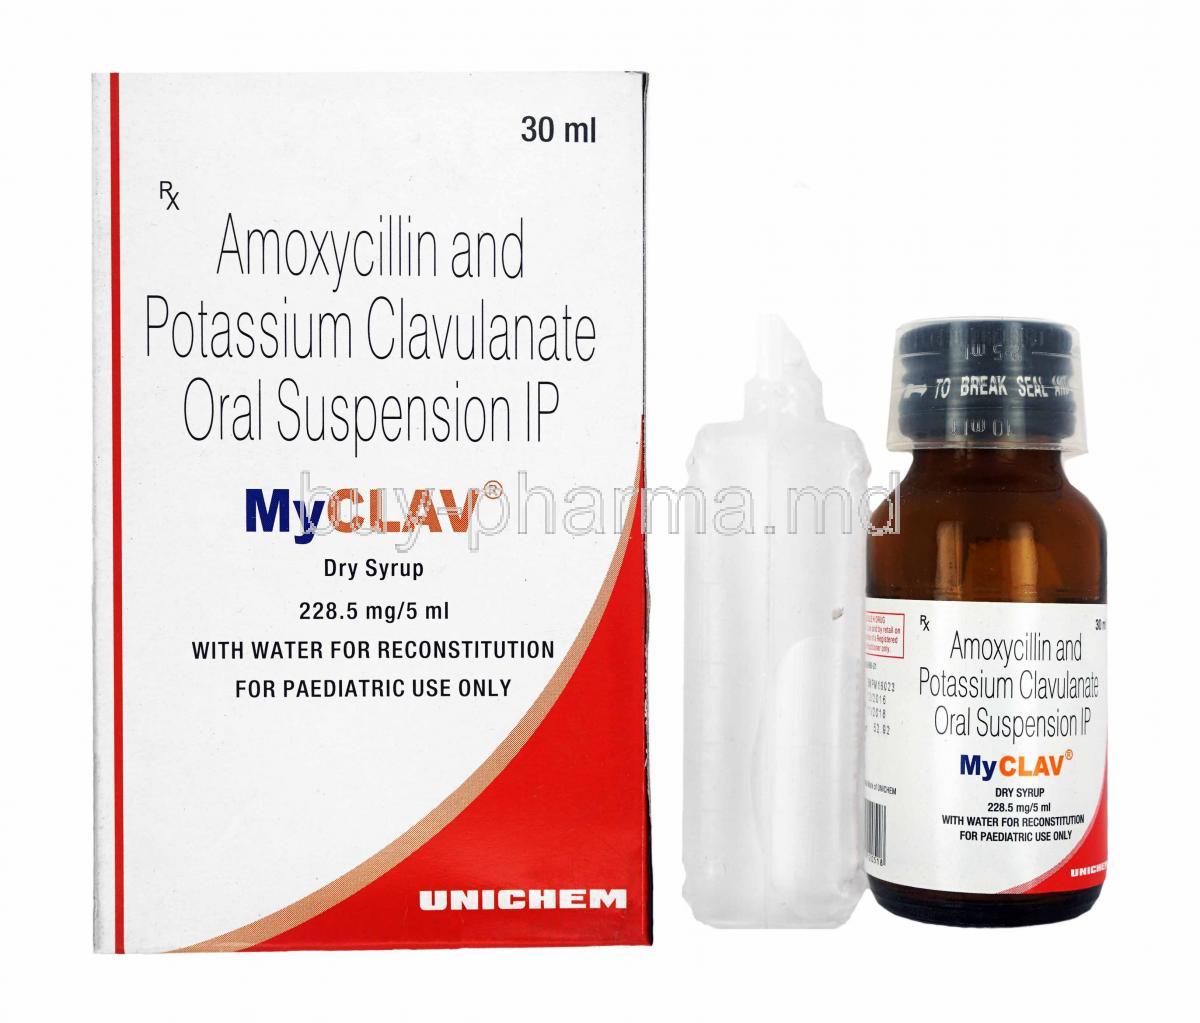 Myclav Dry Syrup, Amoxycillin and Clavulanic Acid box and tablets